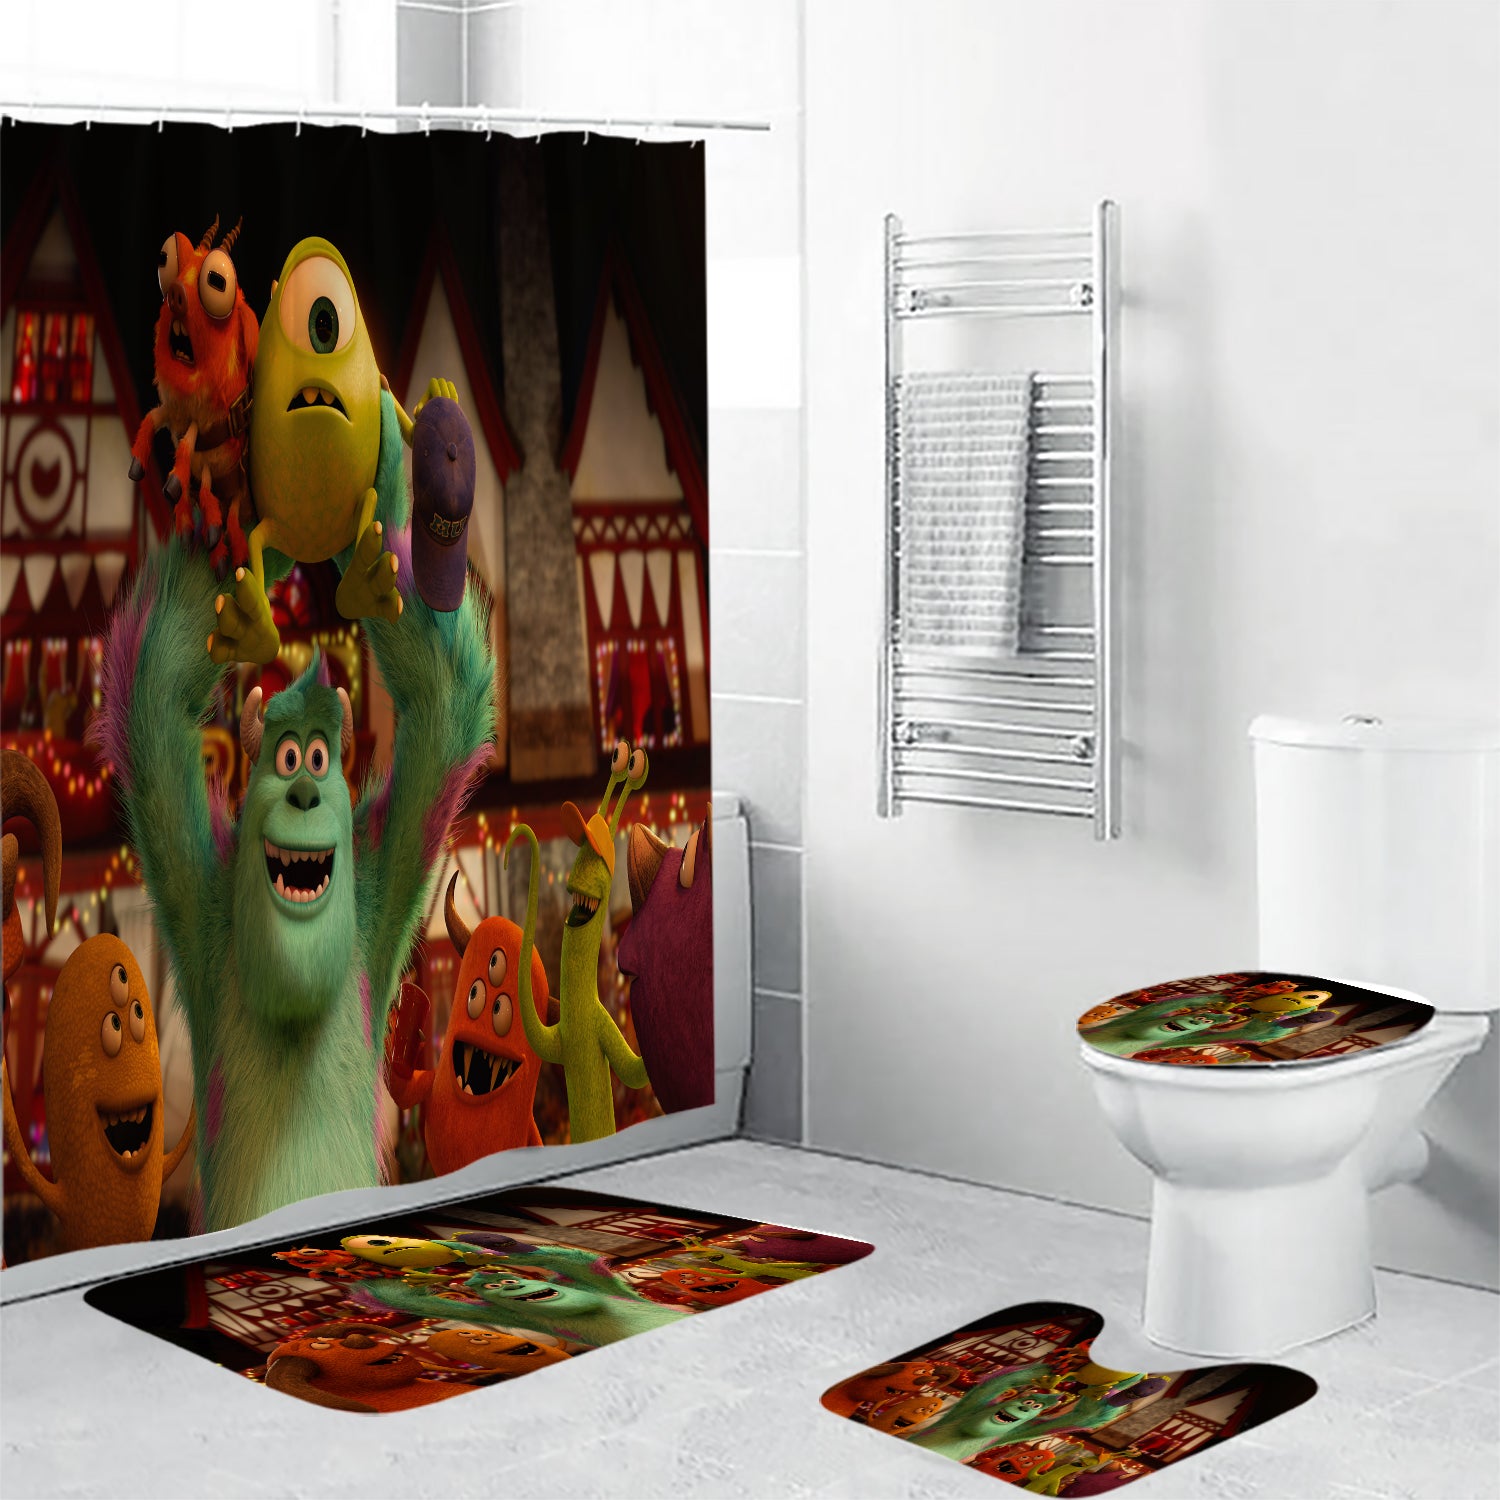 Characters v13 Monsters Inc Monsters University Movie Disney Pixar Waterproof Shower Curtain Non-Slip Toilet Lid Cover Bath Mat - Bathroom Set